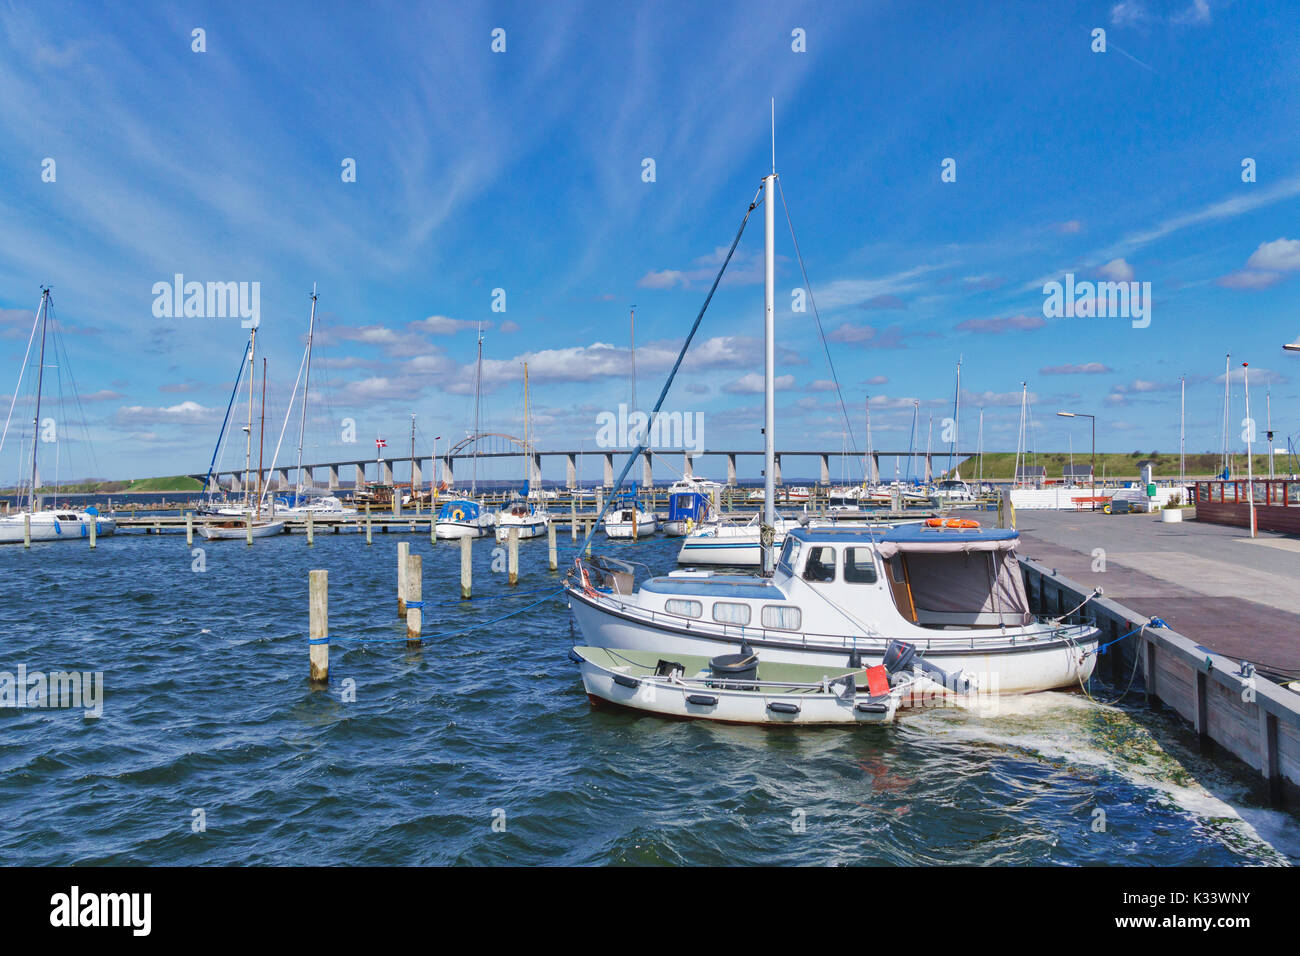 Boats in the Rudkobing harbor with the Langelandsbroen on the island Langeland, Denmark Stock Photo